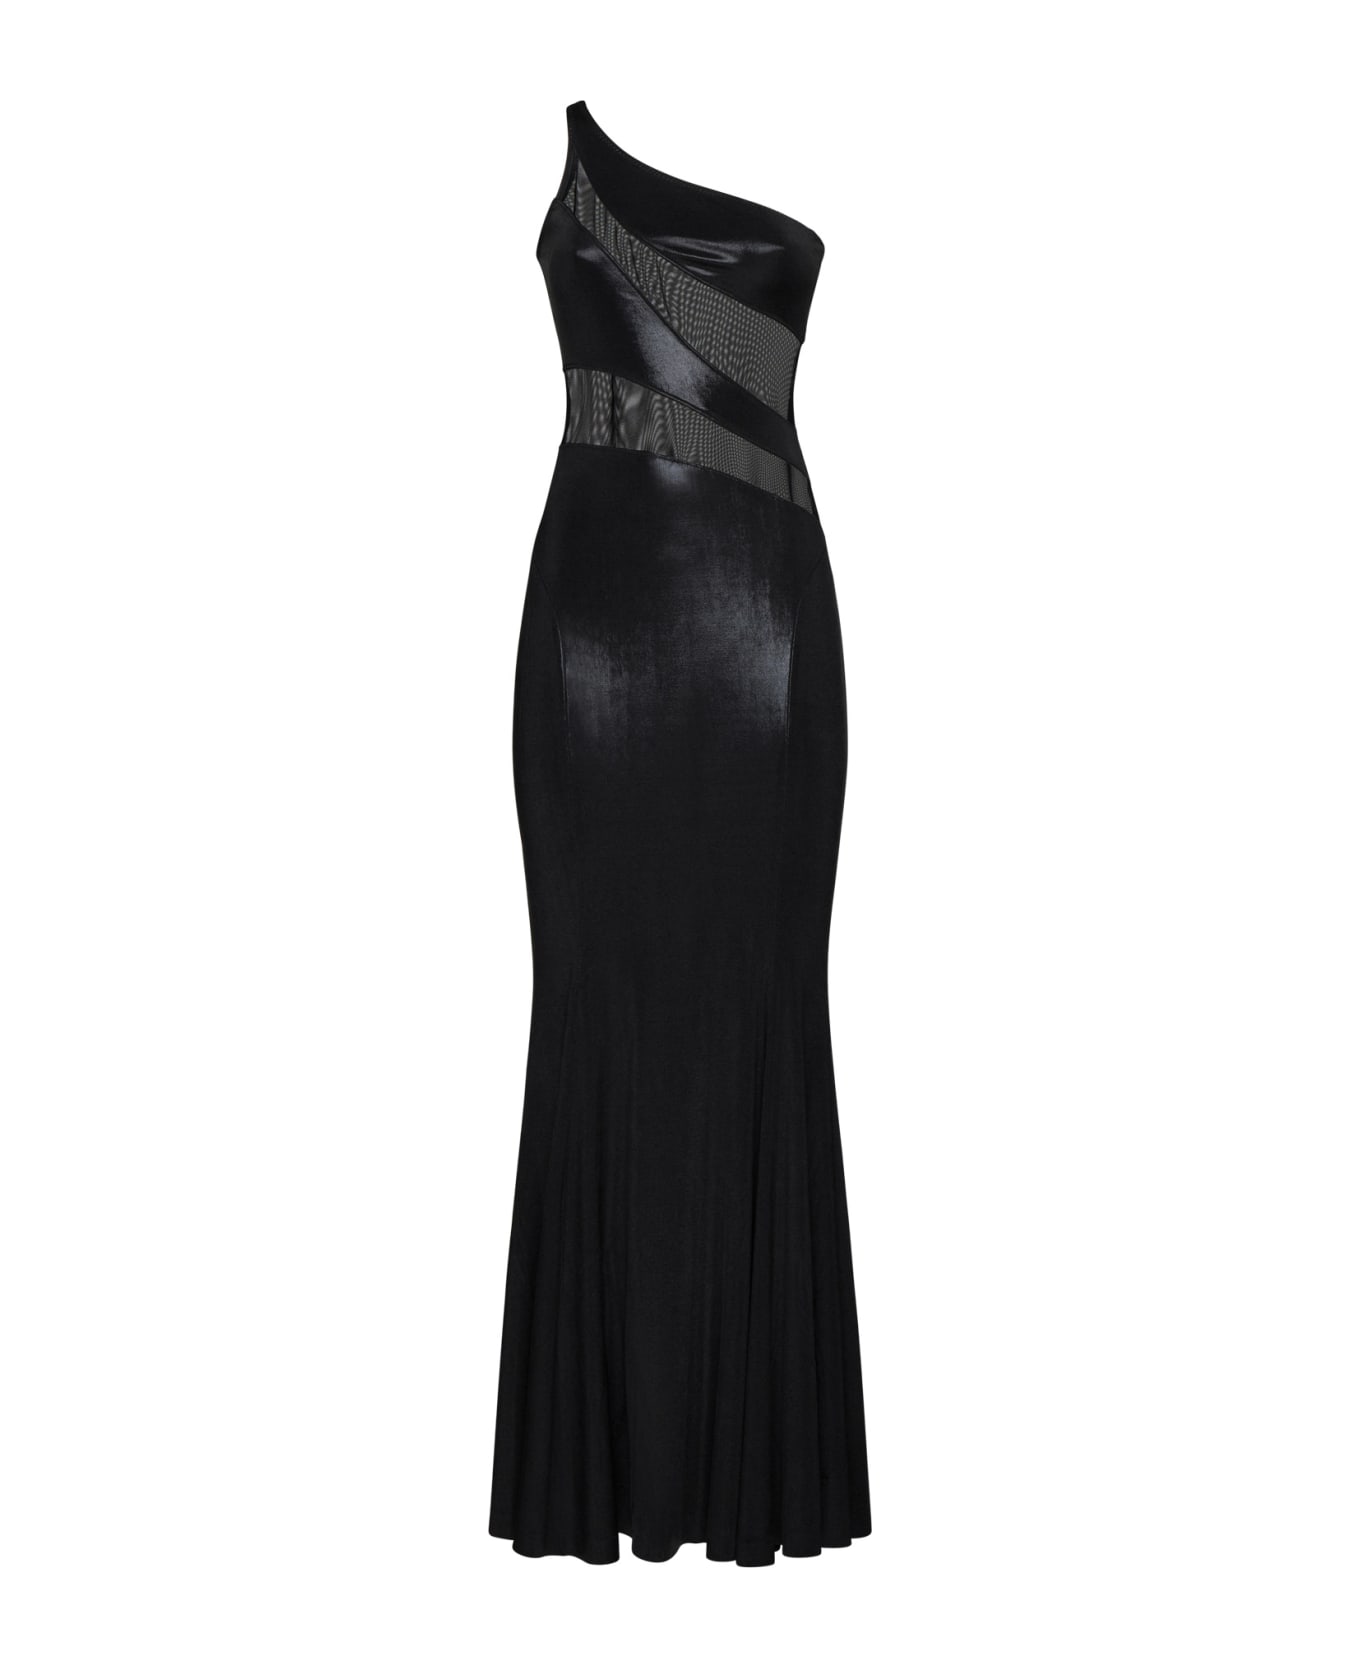 Norma Kamali Dress - Black/black mesh